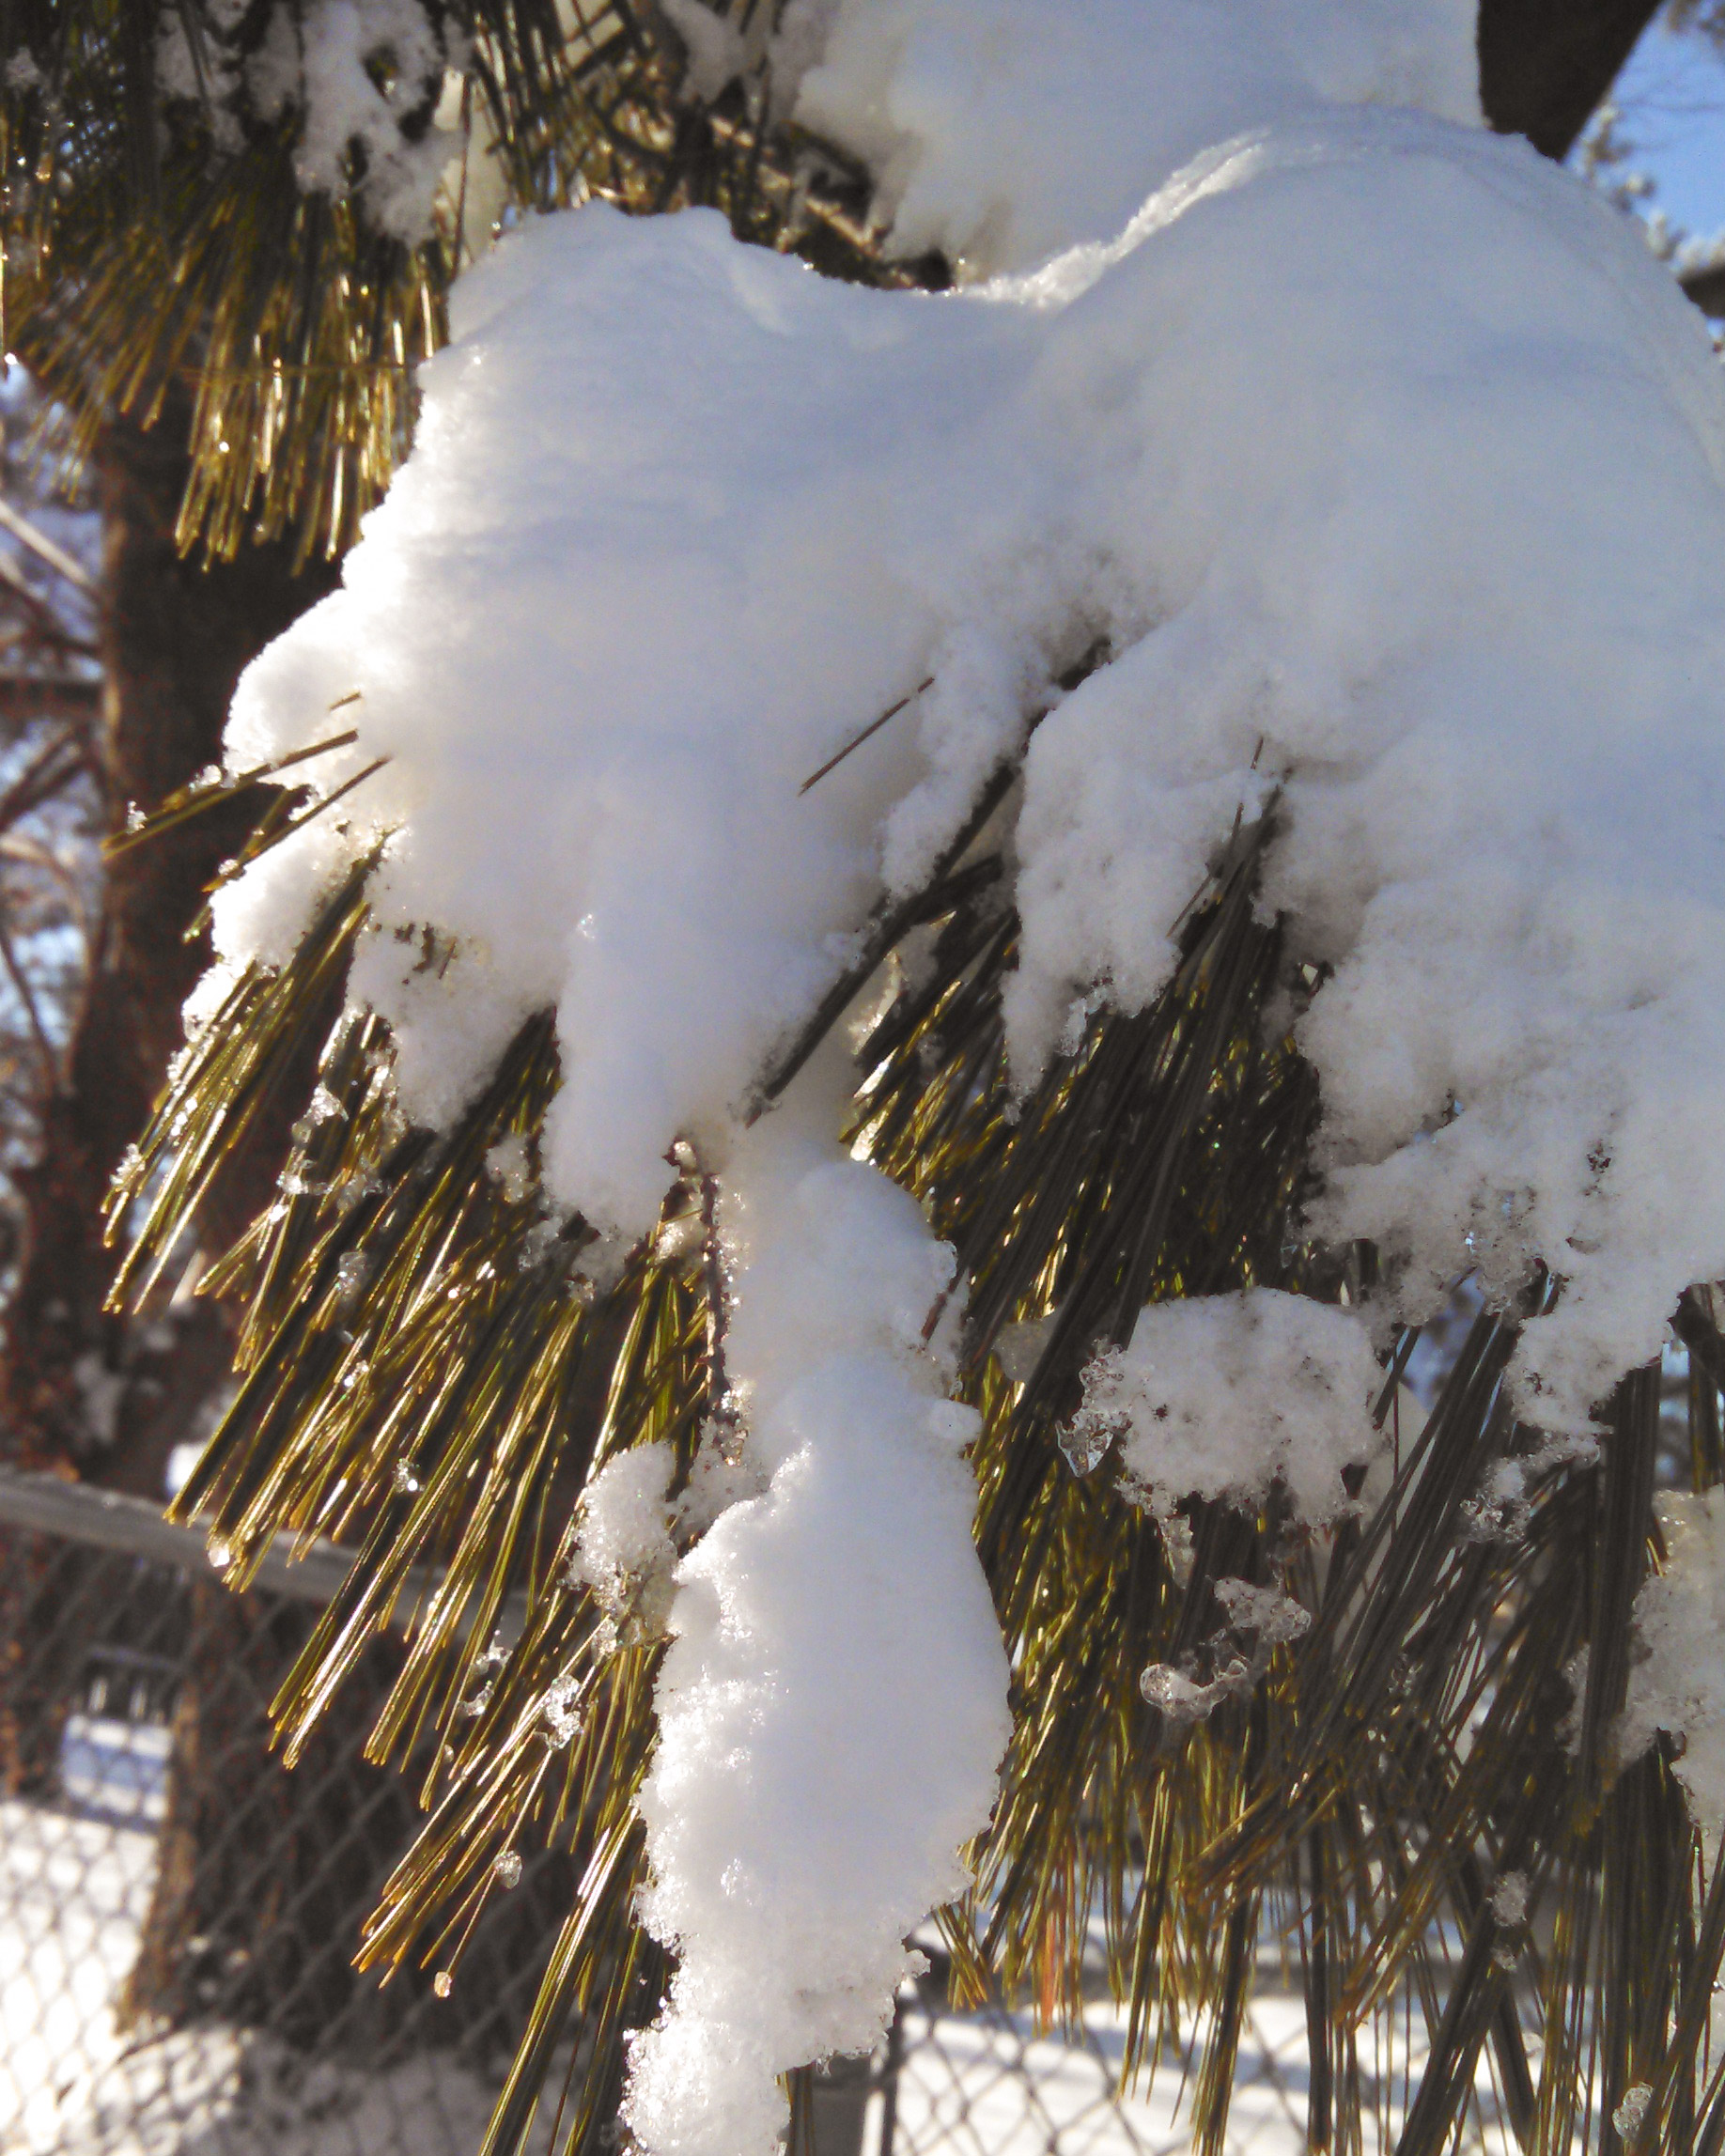 Snow loading on trees